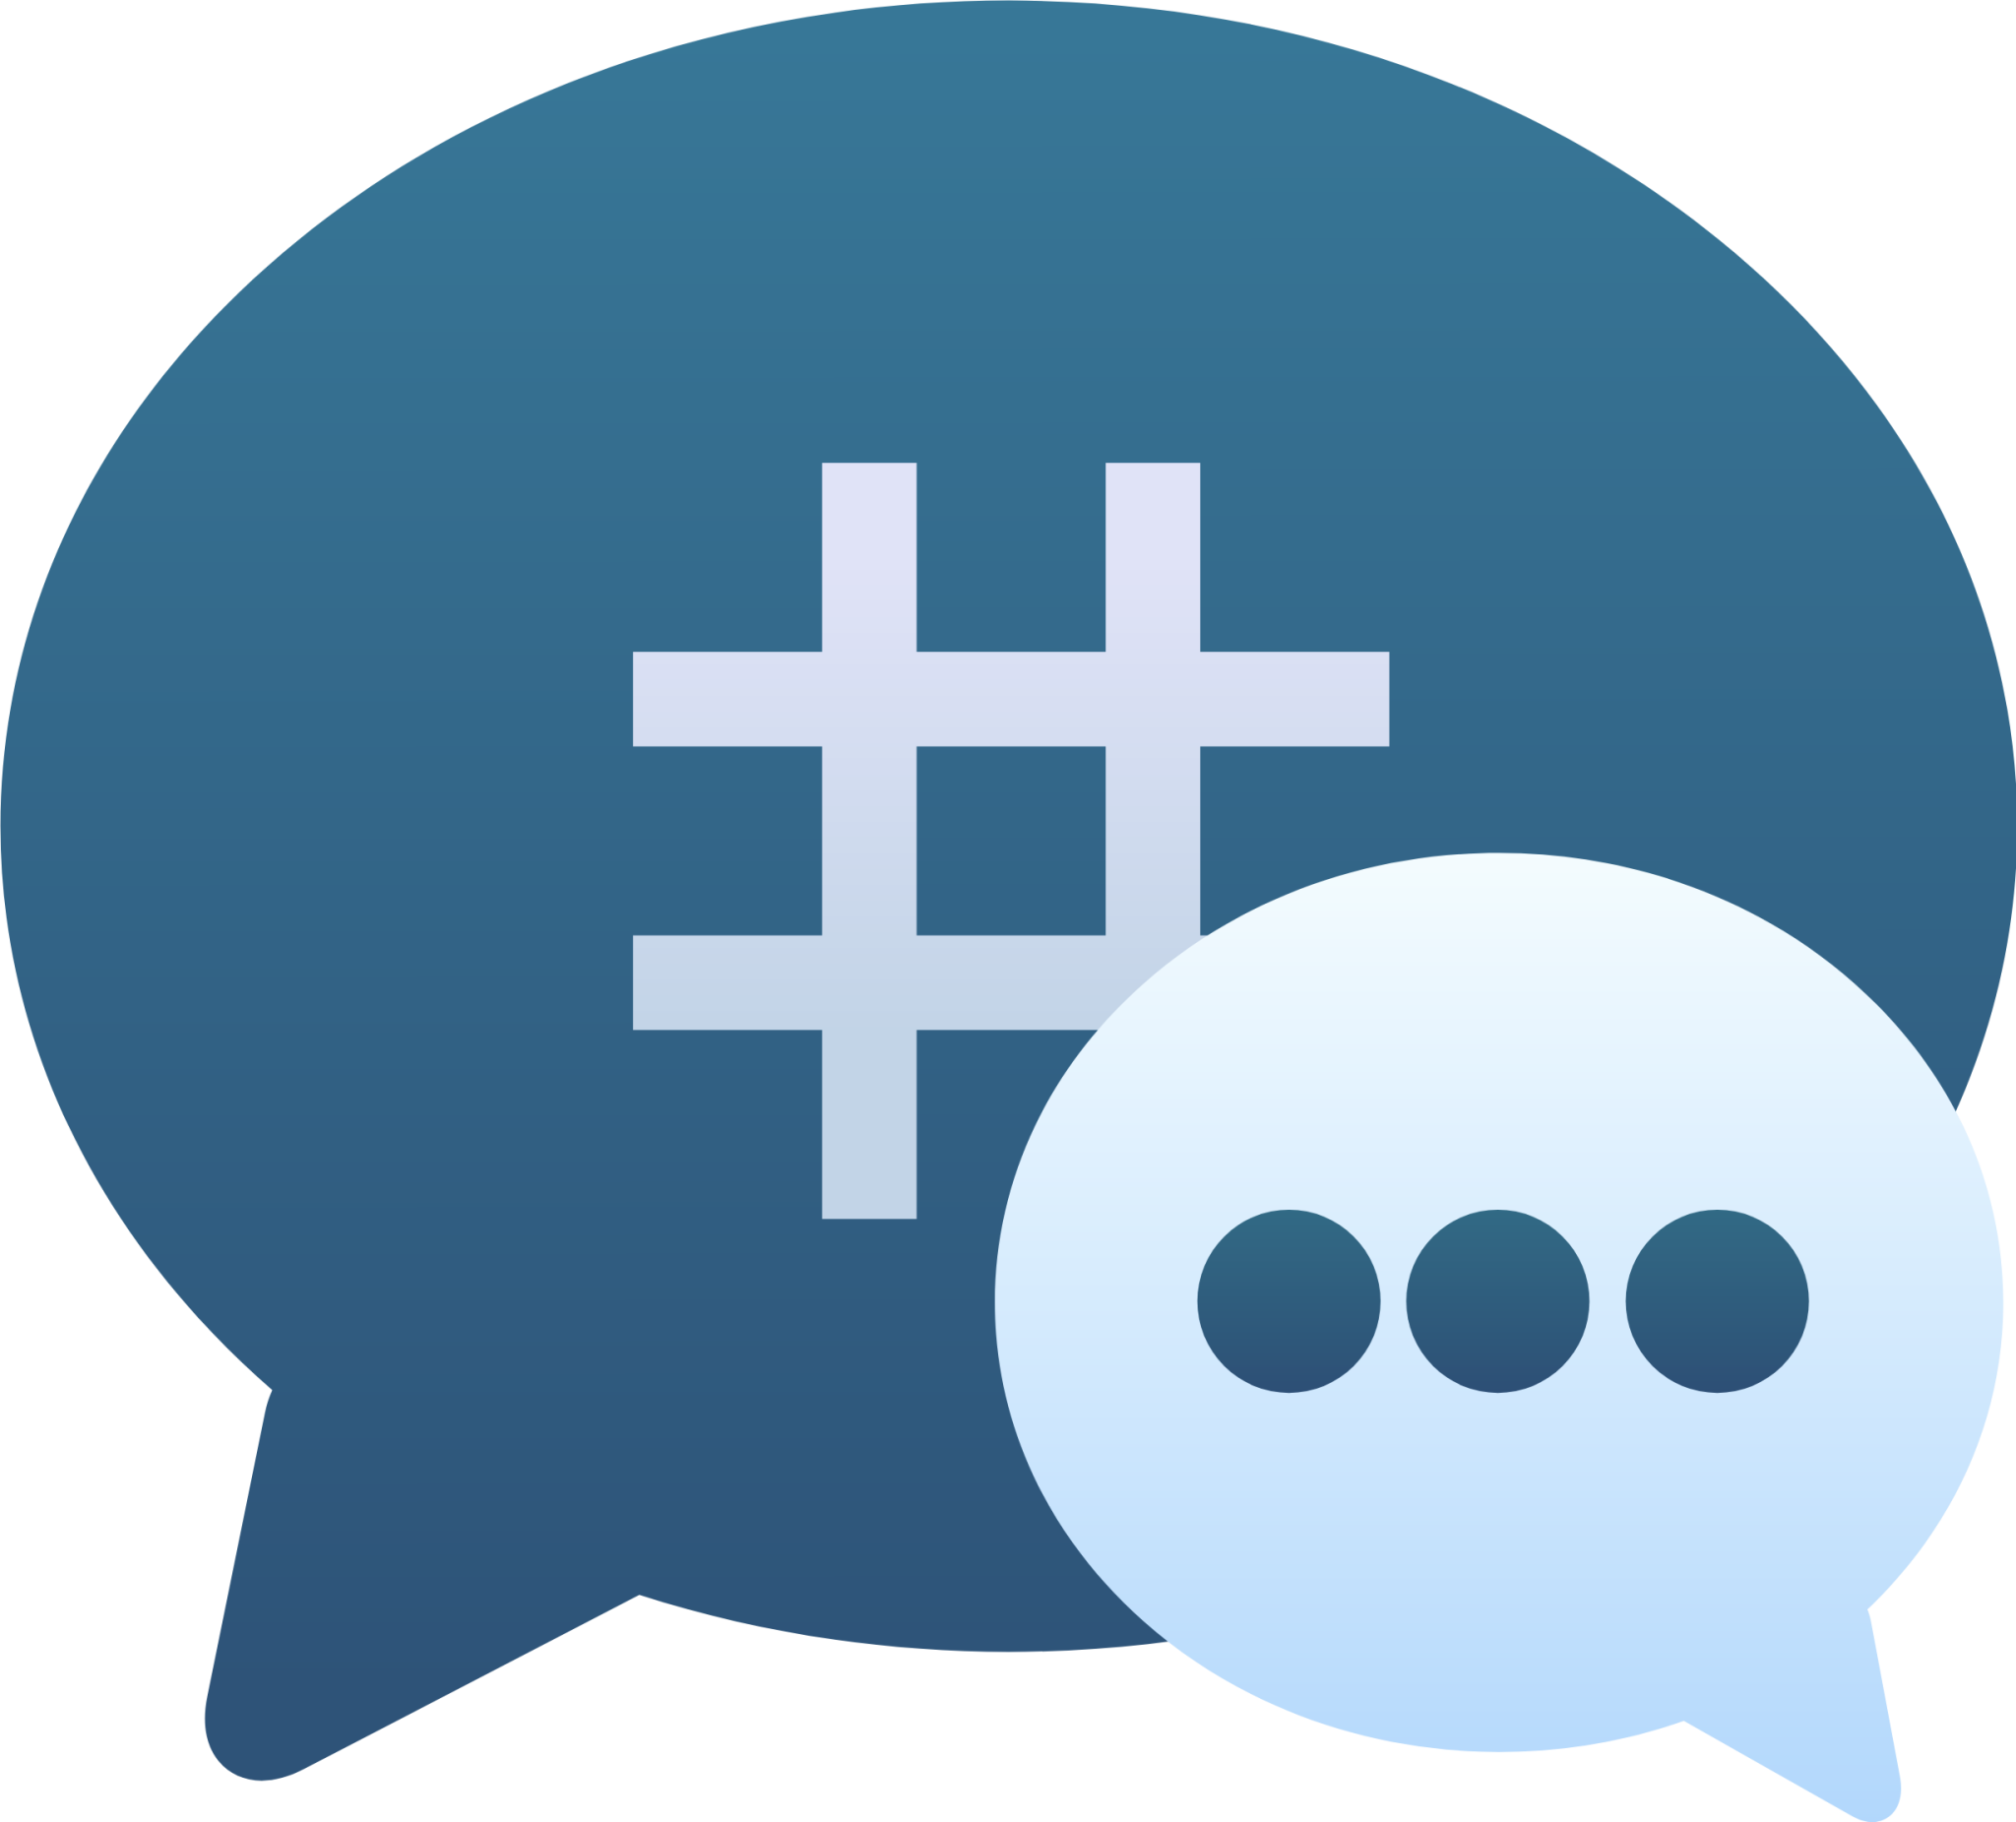 internet chat icon